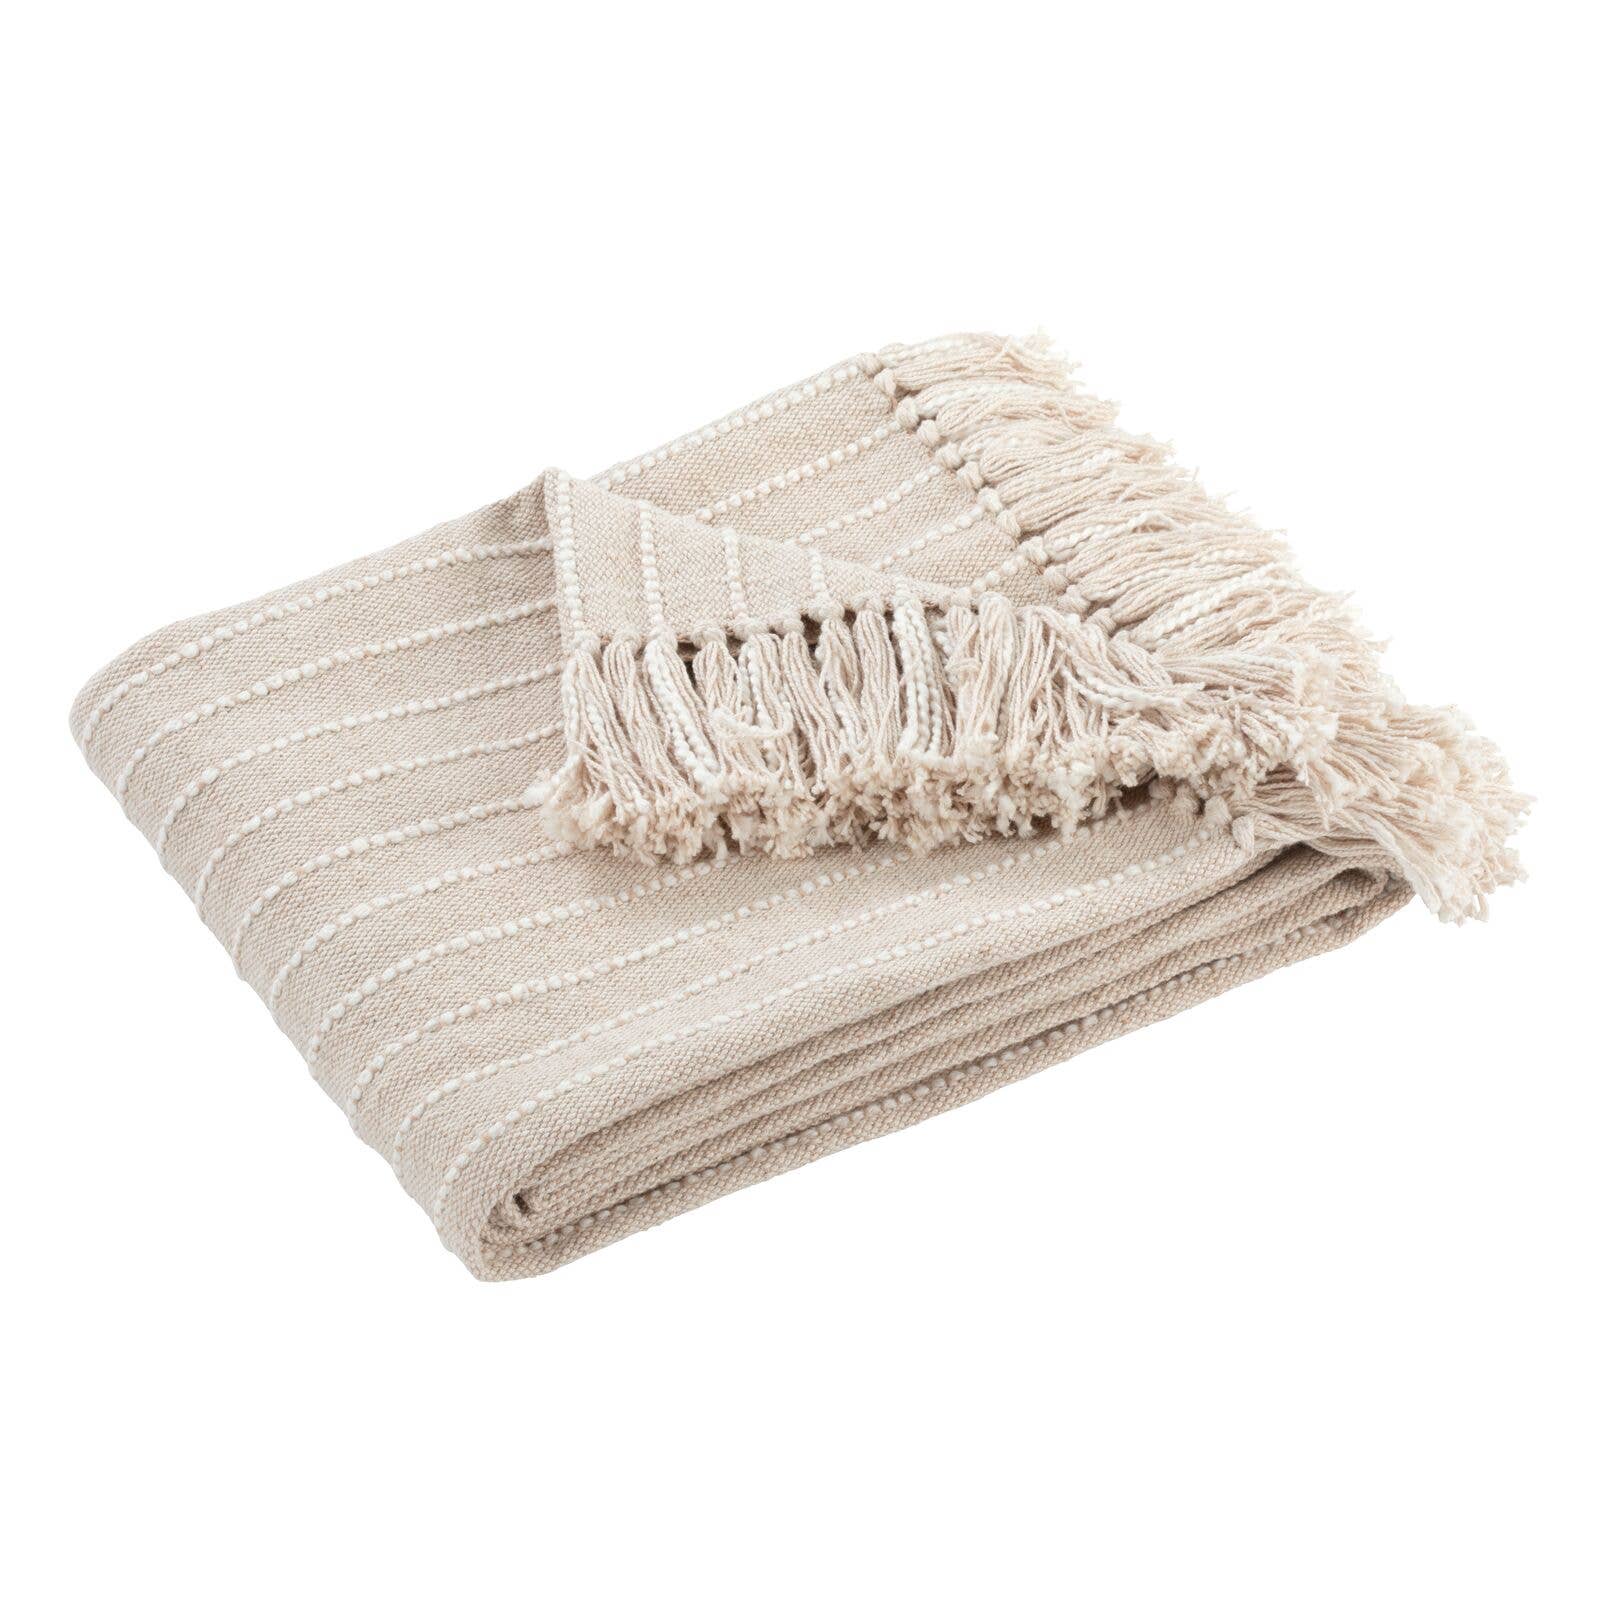 Striped Cotton Throw Blanket - Natural